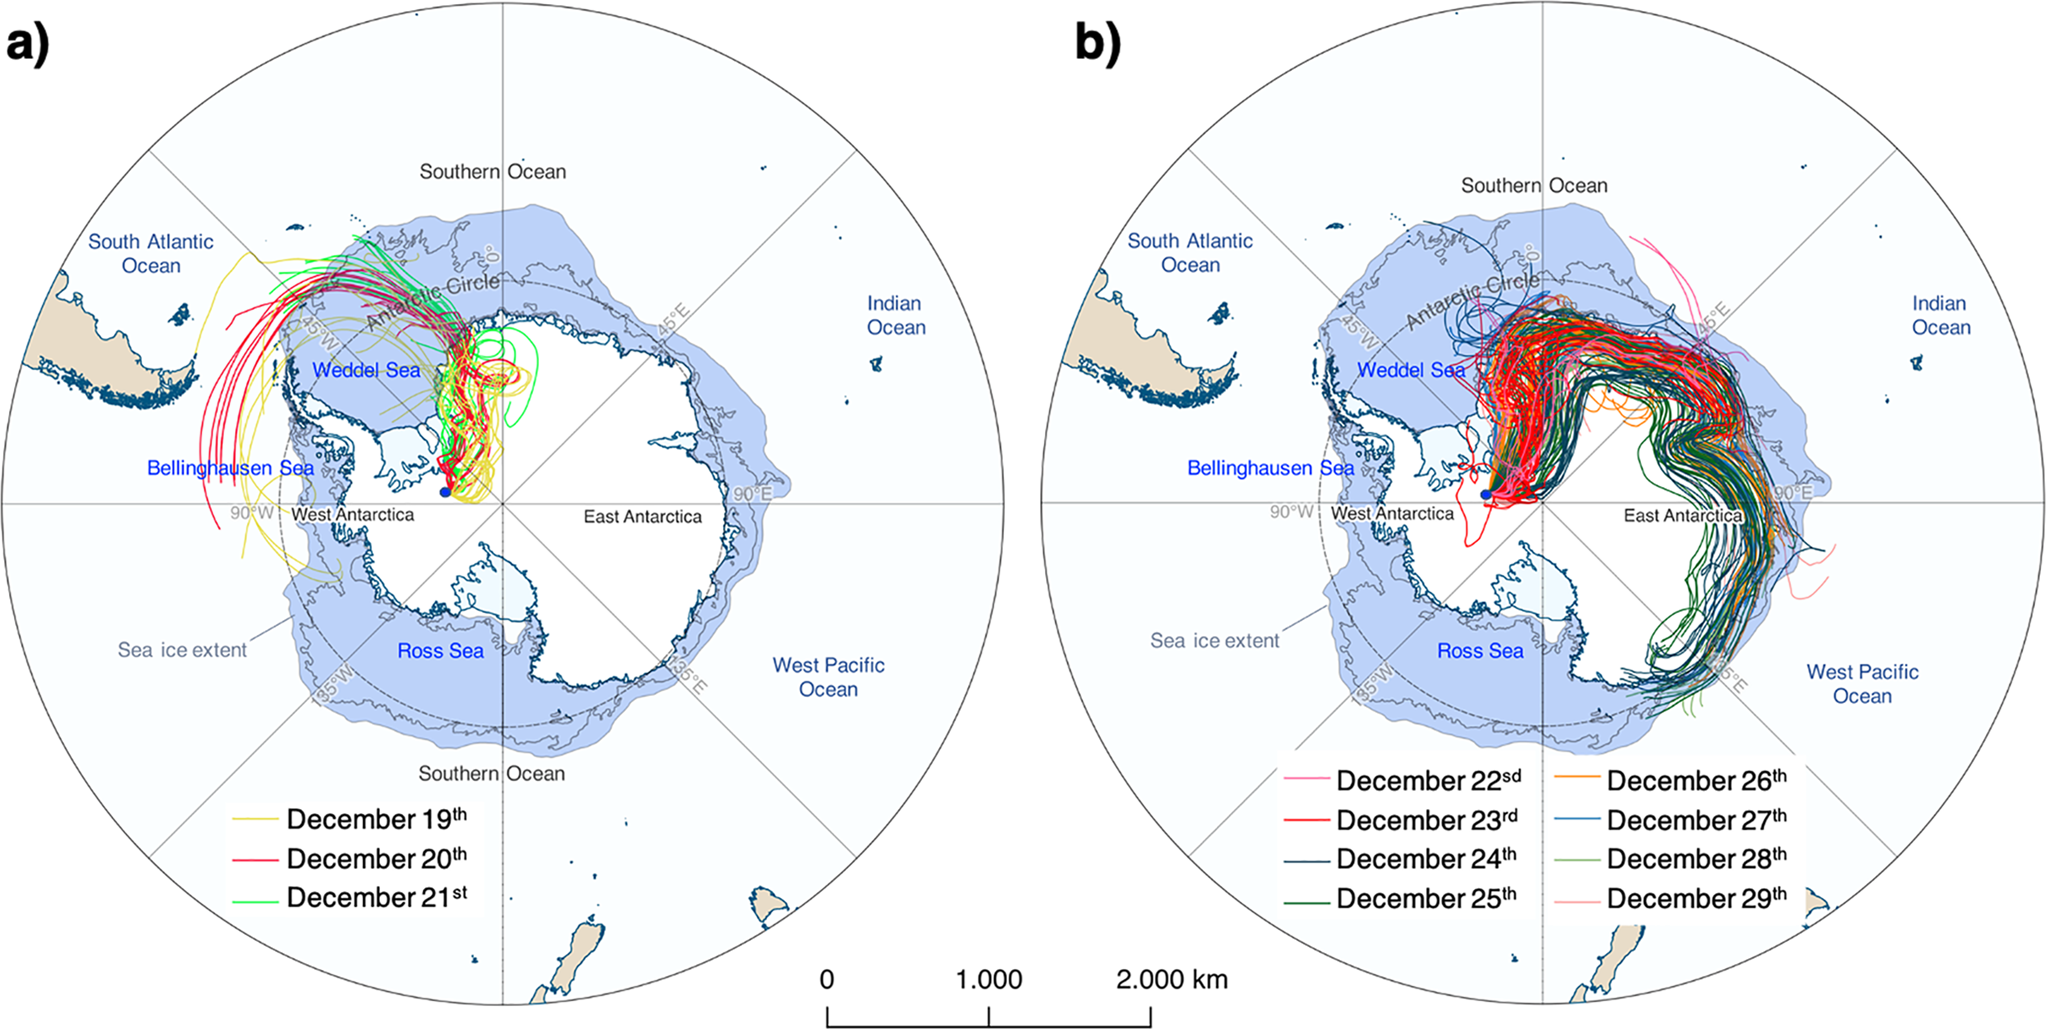 Stratospheric ozone depletion in the Antarctic region triggers intense  changes in sea salt aerosol geochemistry